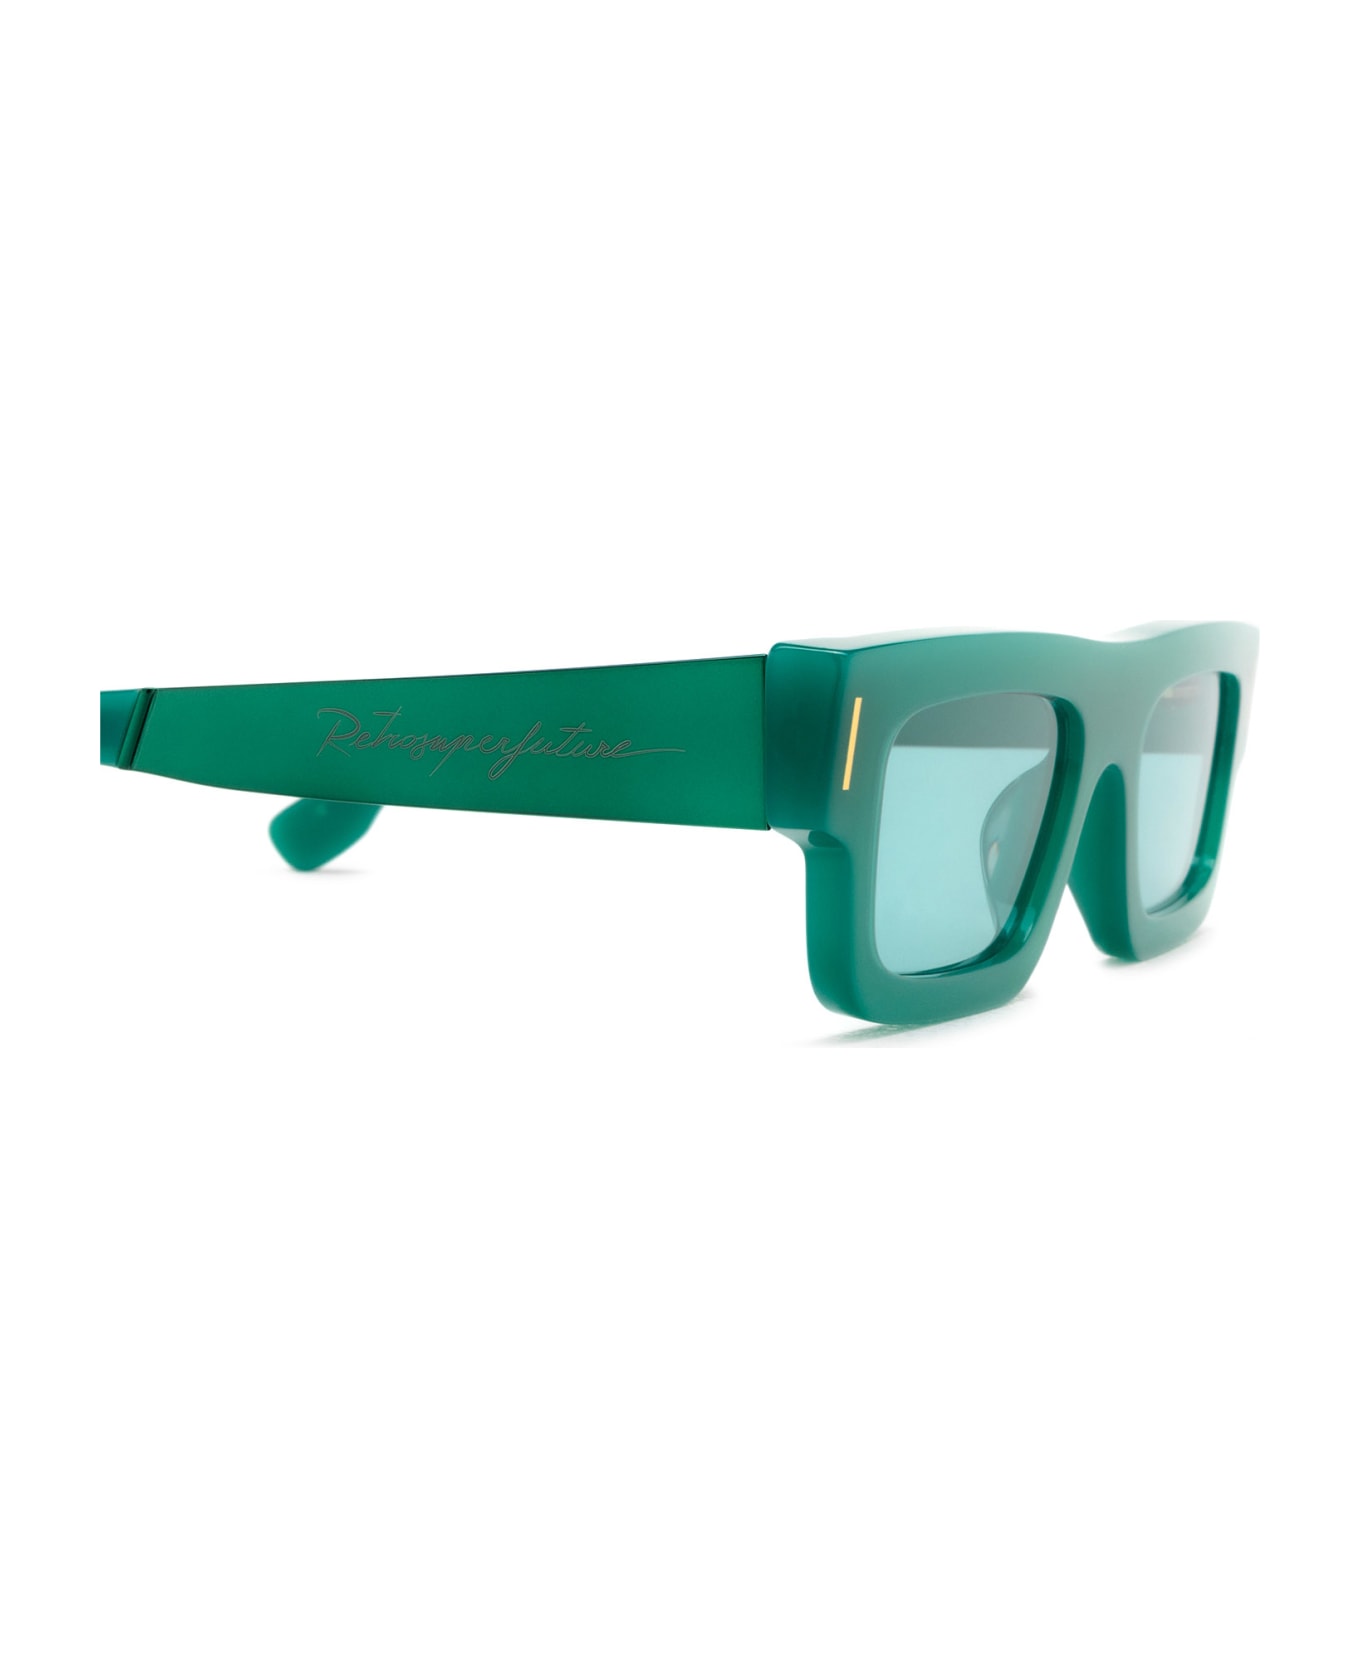 RETROSUPERFUTURE Colpo Francis Green Sunglasses - Green サングラス